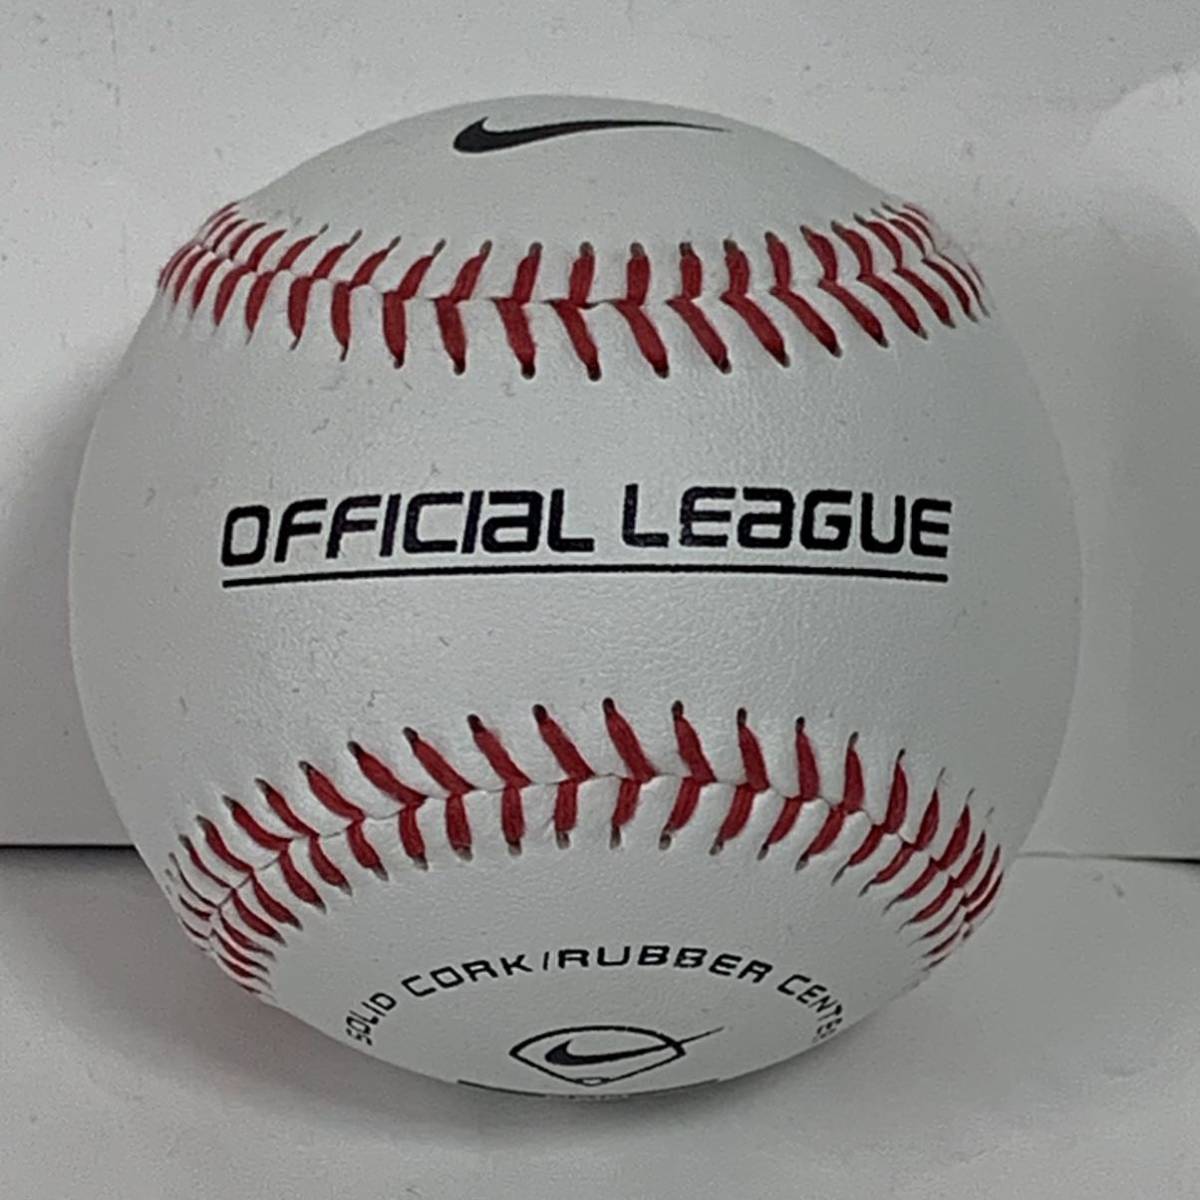 NIKE ナイキ OFFICIAL LEAGUE オフィシャル リーグ 公式 野球 ボール ベースボール 硬式の画像1